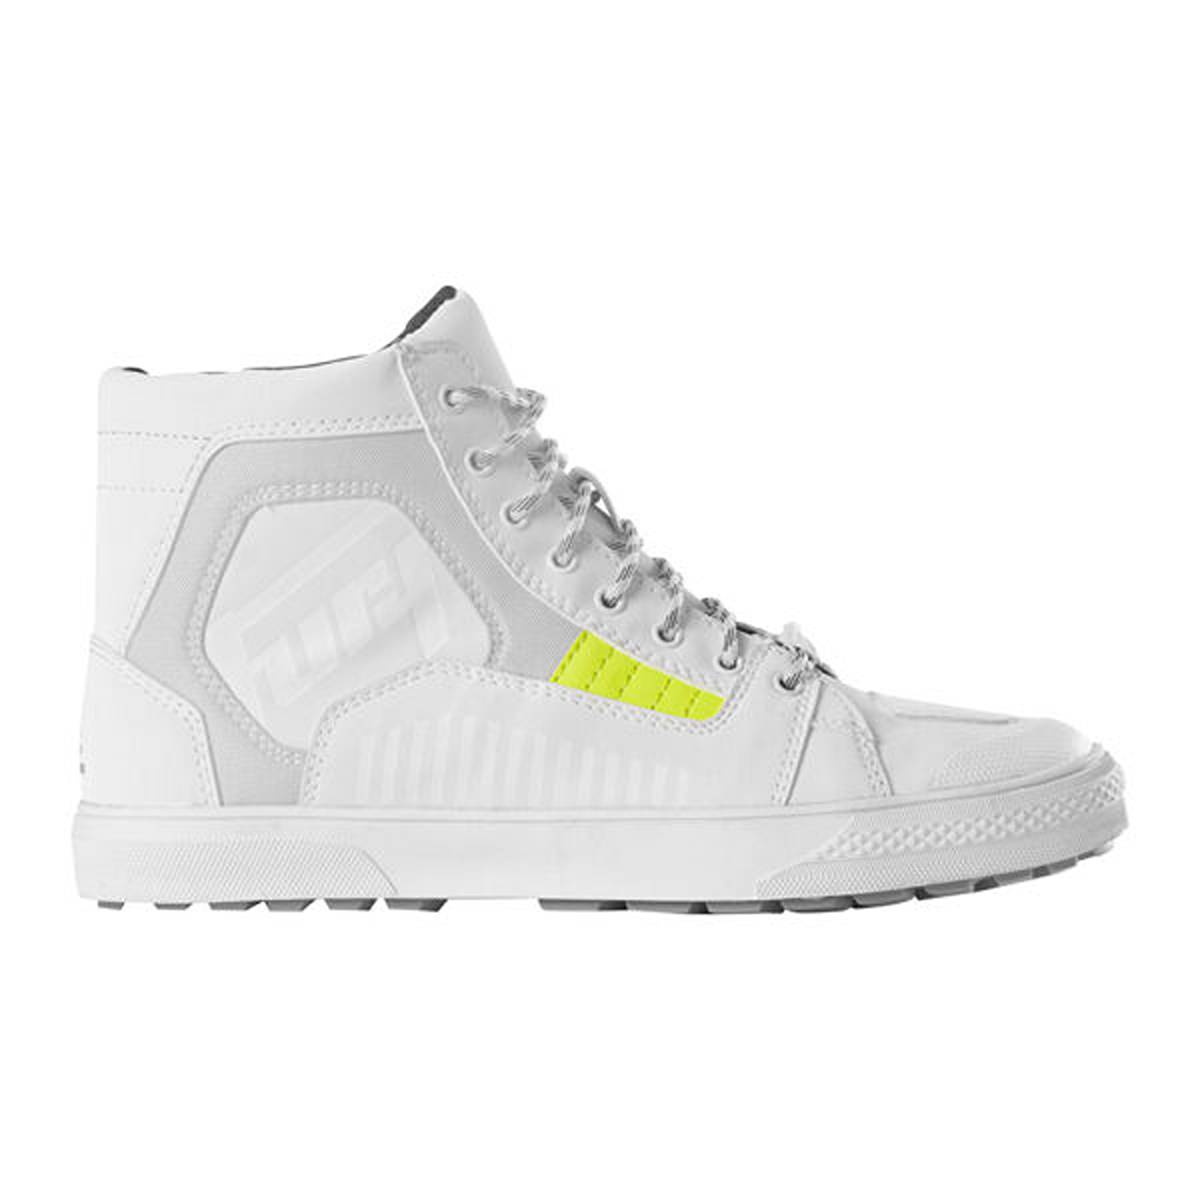 Image of Furygan Sacramento D30 Shoes White Grey Size 41 ID 3435980368135